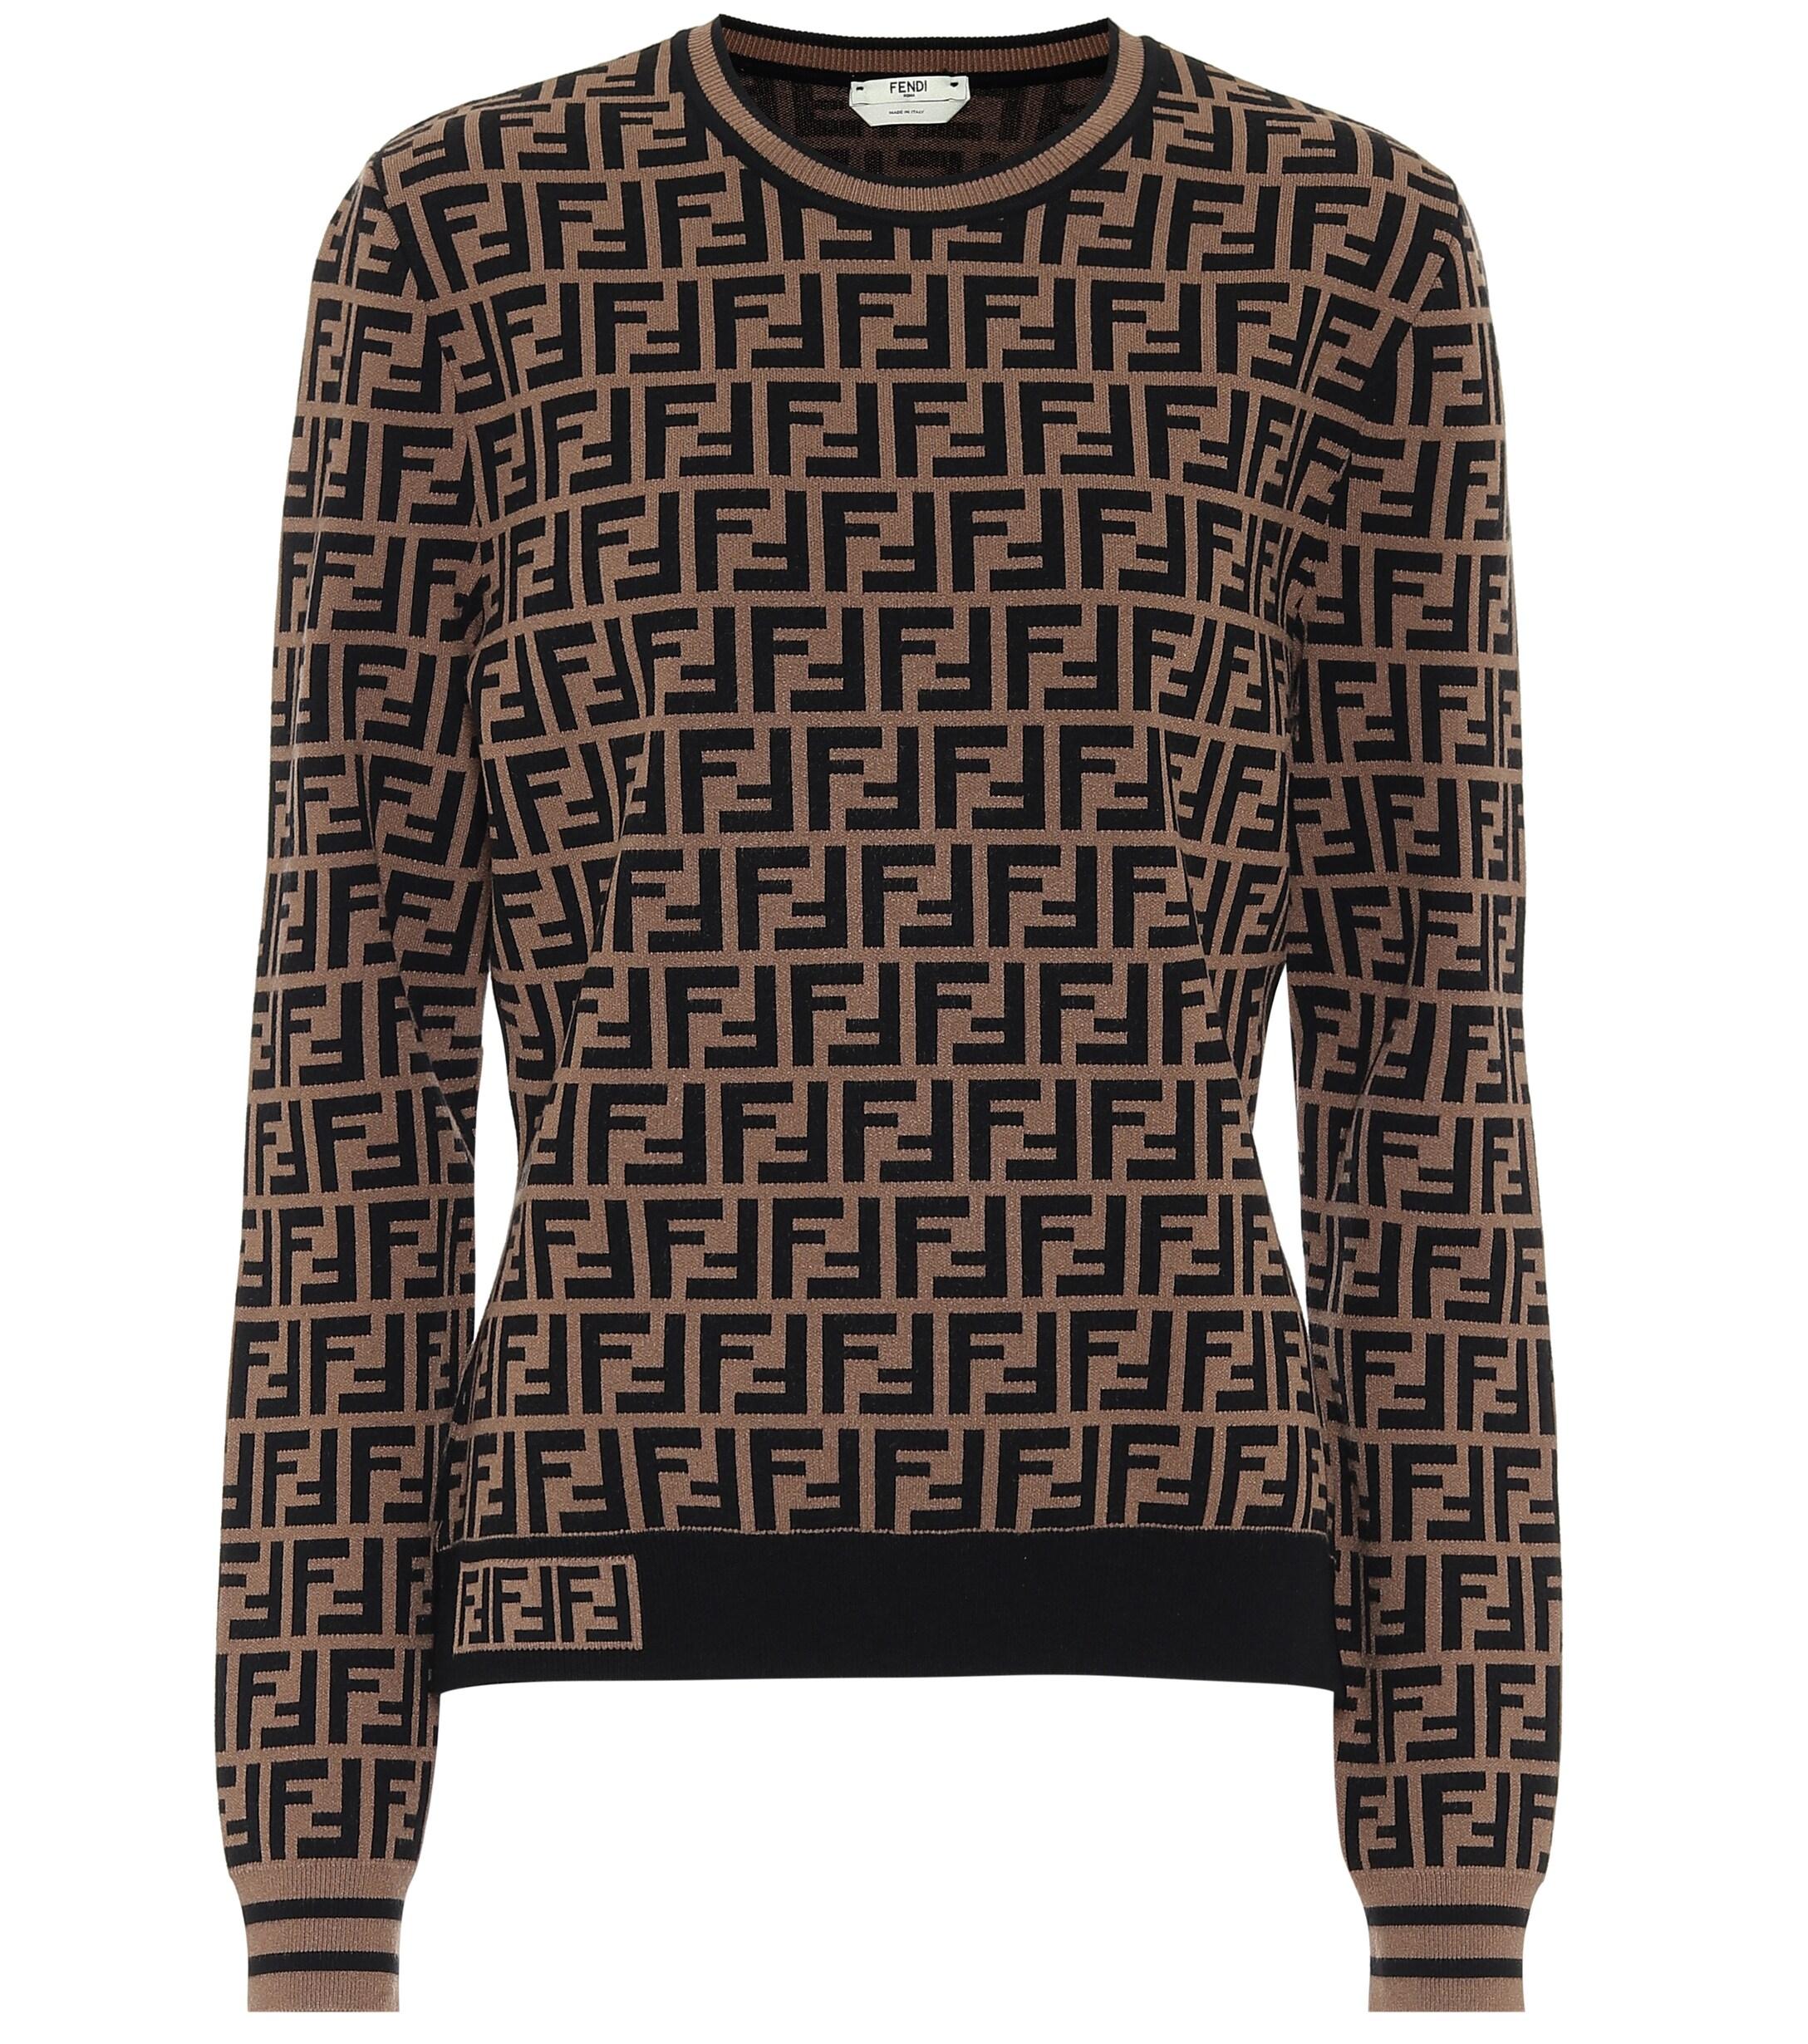 Fendi Ff Jacquard Sweater in Brown - Lyst